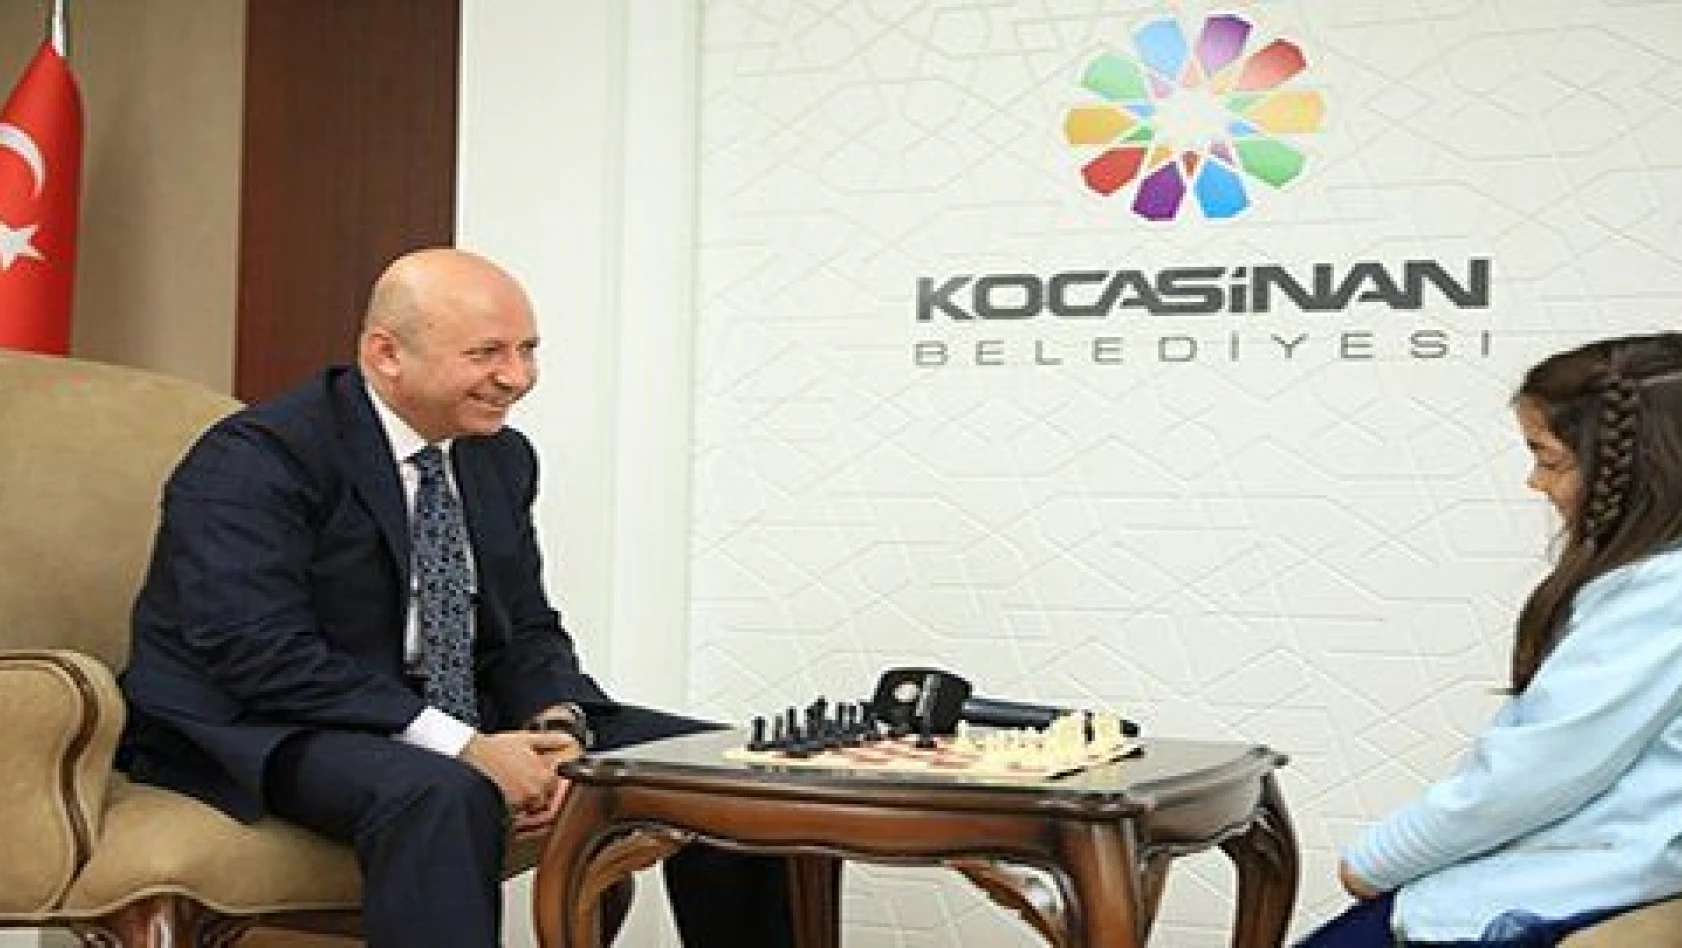 Başkan Çolakbayrakdar, minik sporcuyla satranç oynadı